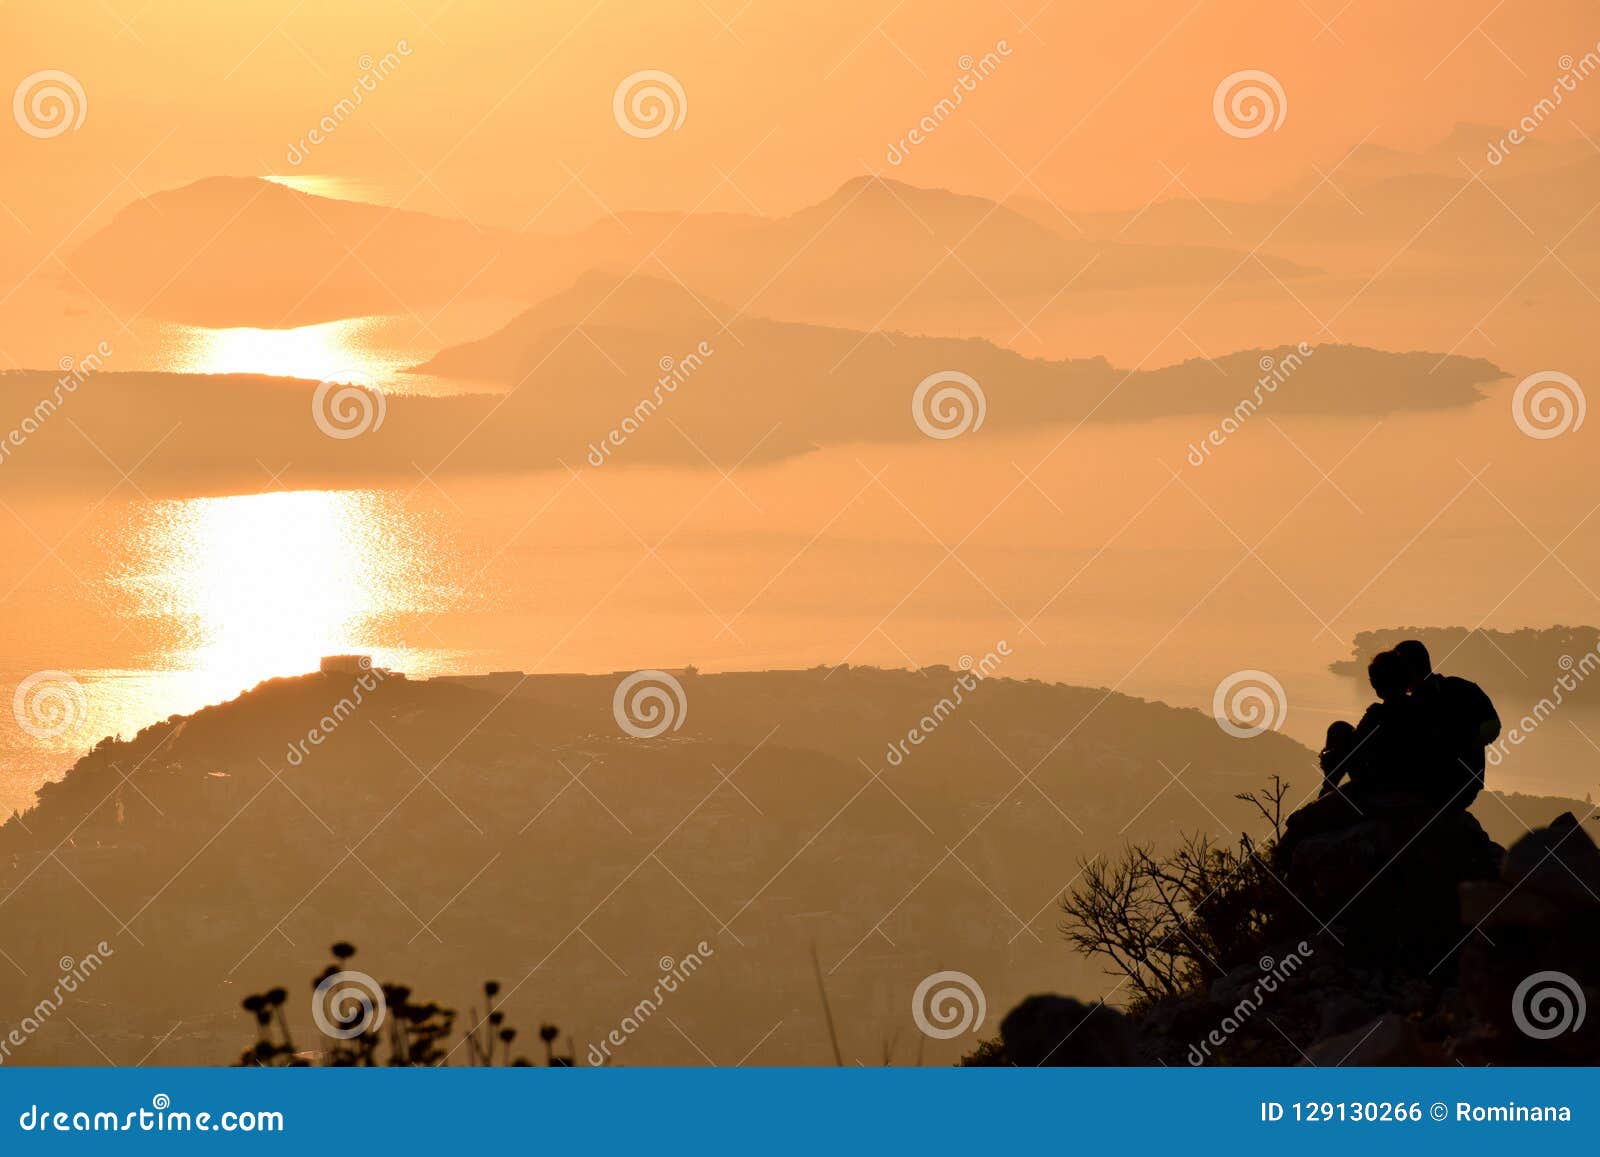 sunset from croacia